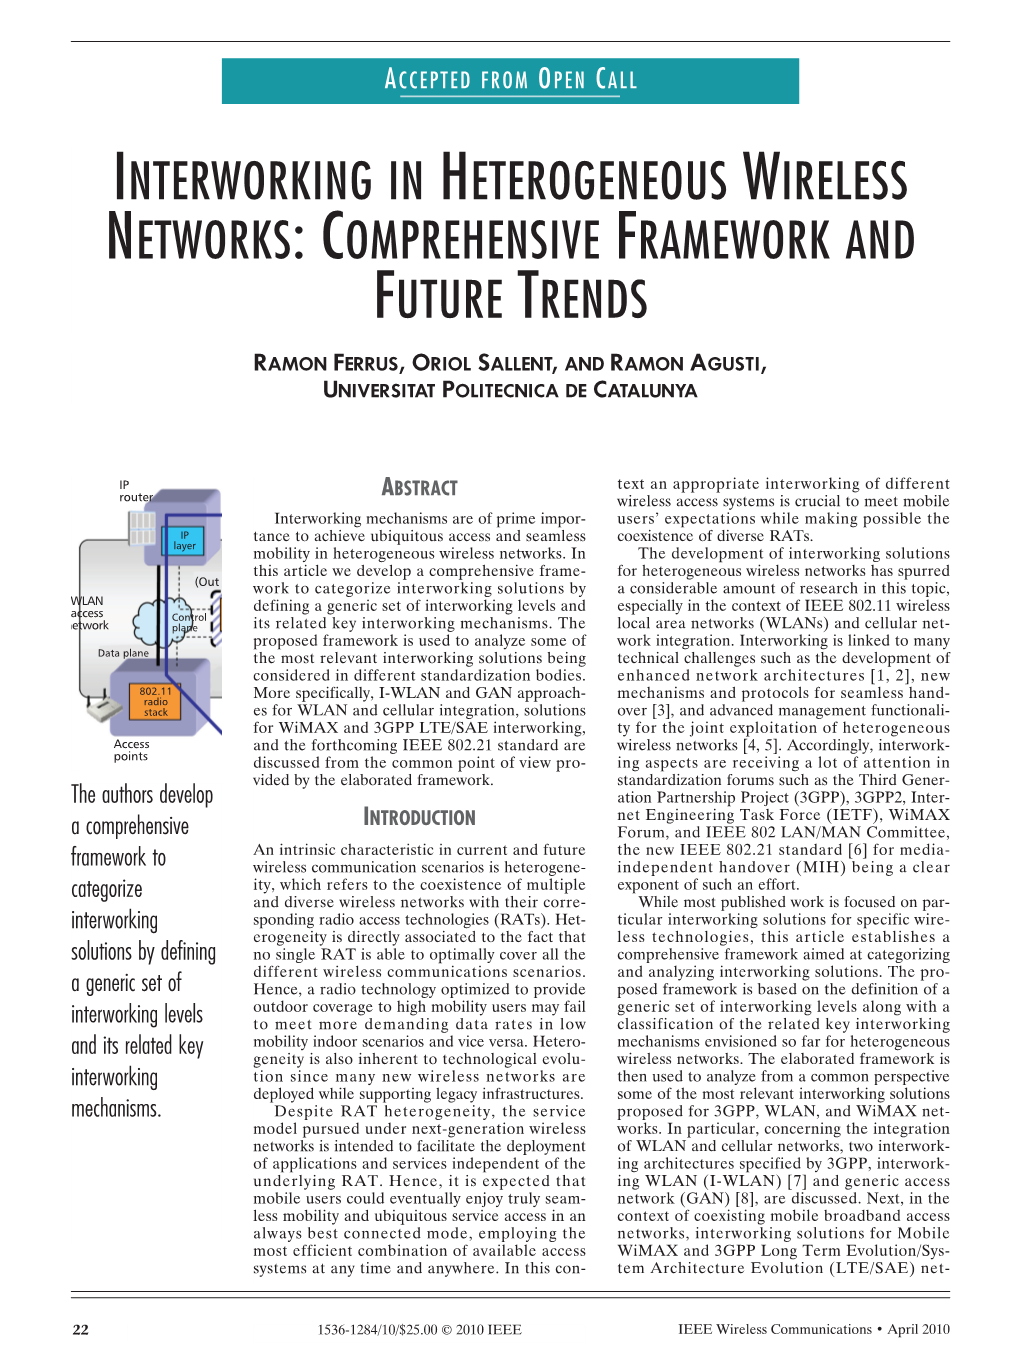 Interworking in Heterogeneous Wireless Networks: Comprehensive Framework and Future Trends